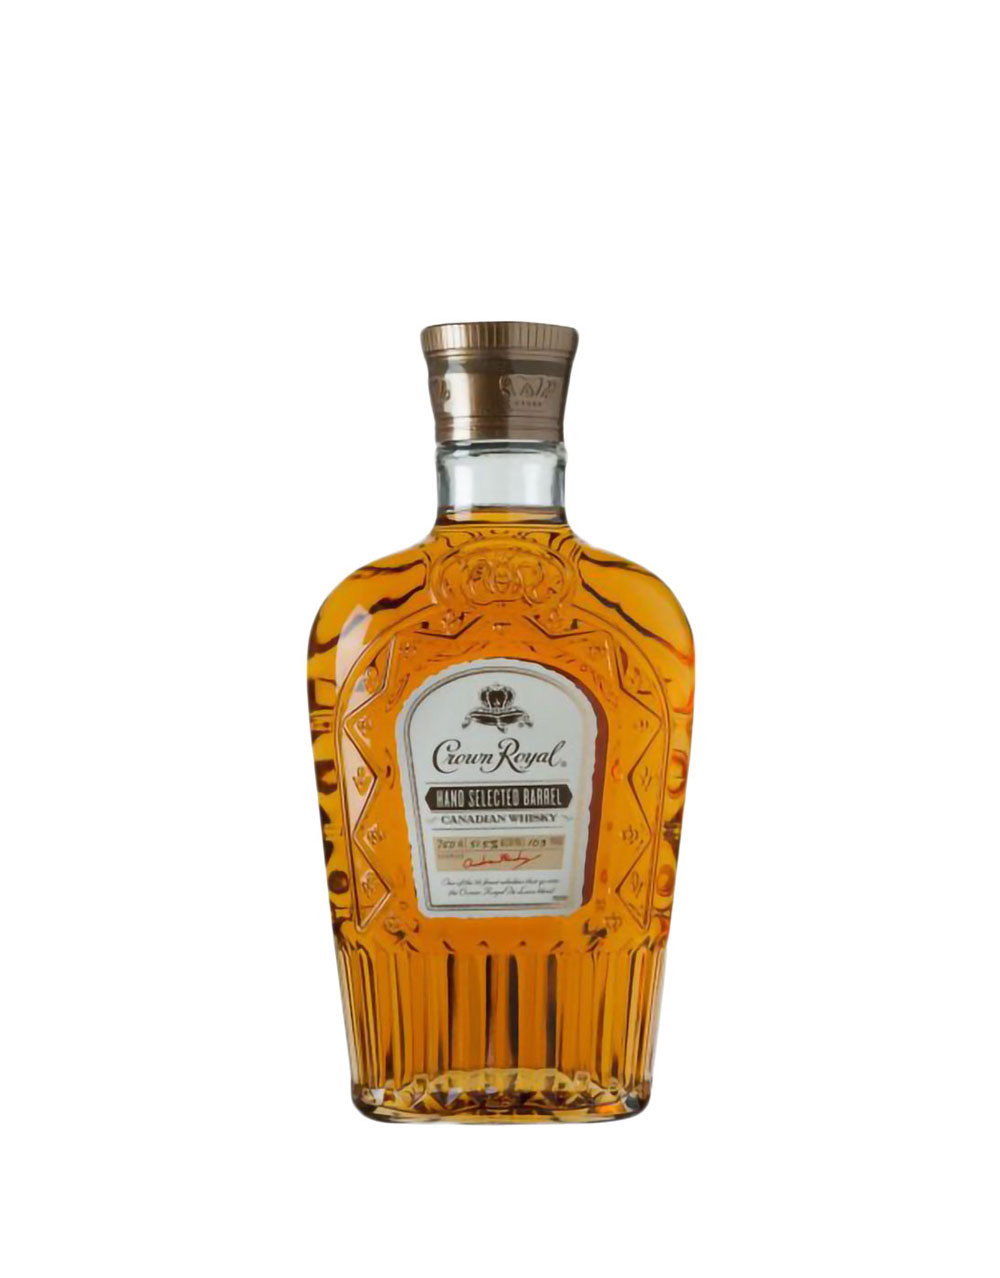 Crown Royal Hand Selected Barrel Whisky